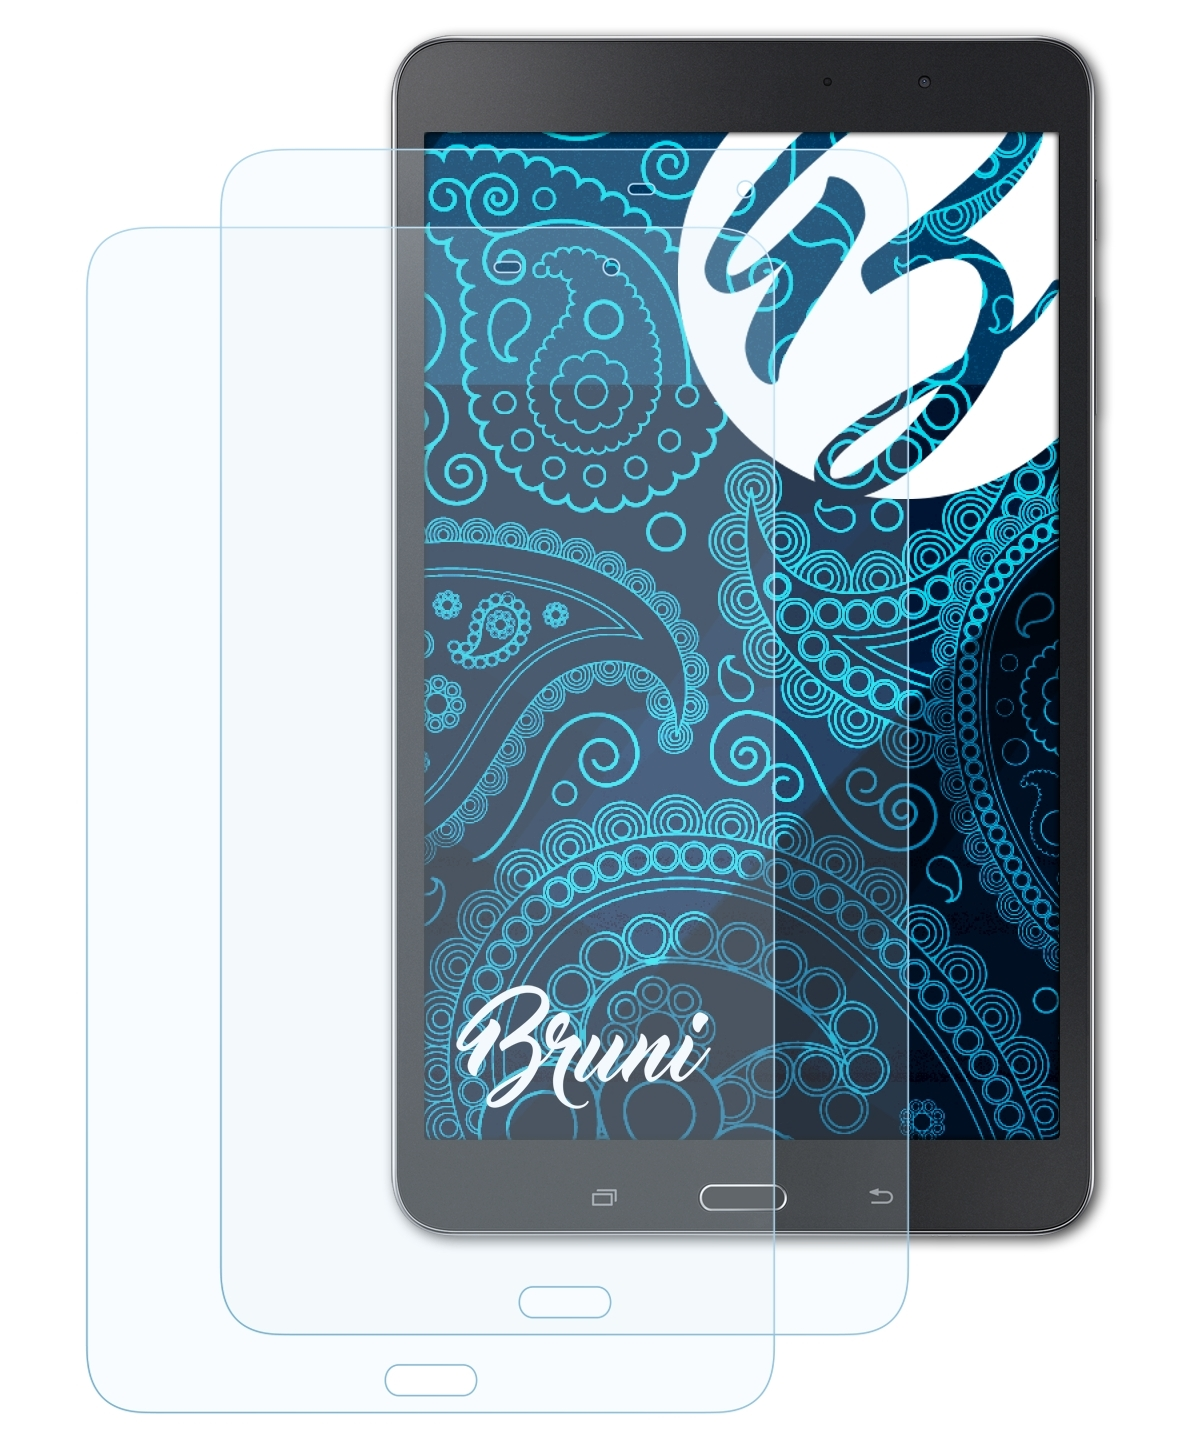 Wi-Fi (SM-T320)) Basics-Clear 8.4 Galaxy BRUNI TabPro Samsung 2x Schutzfolie(für